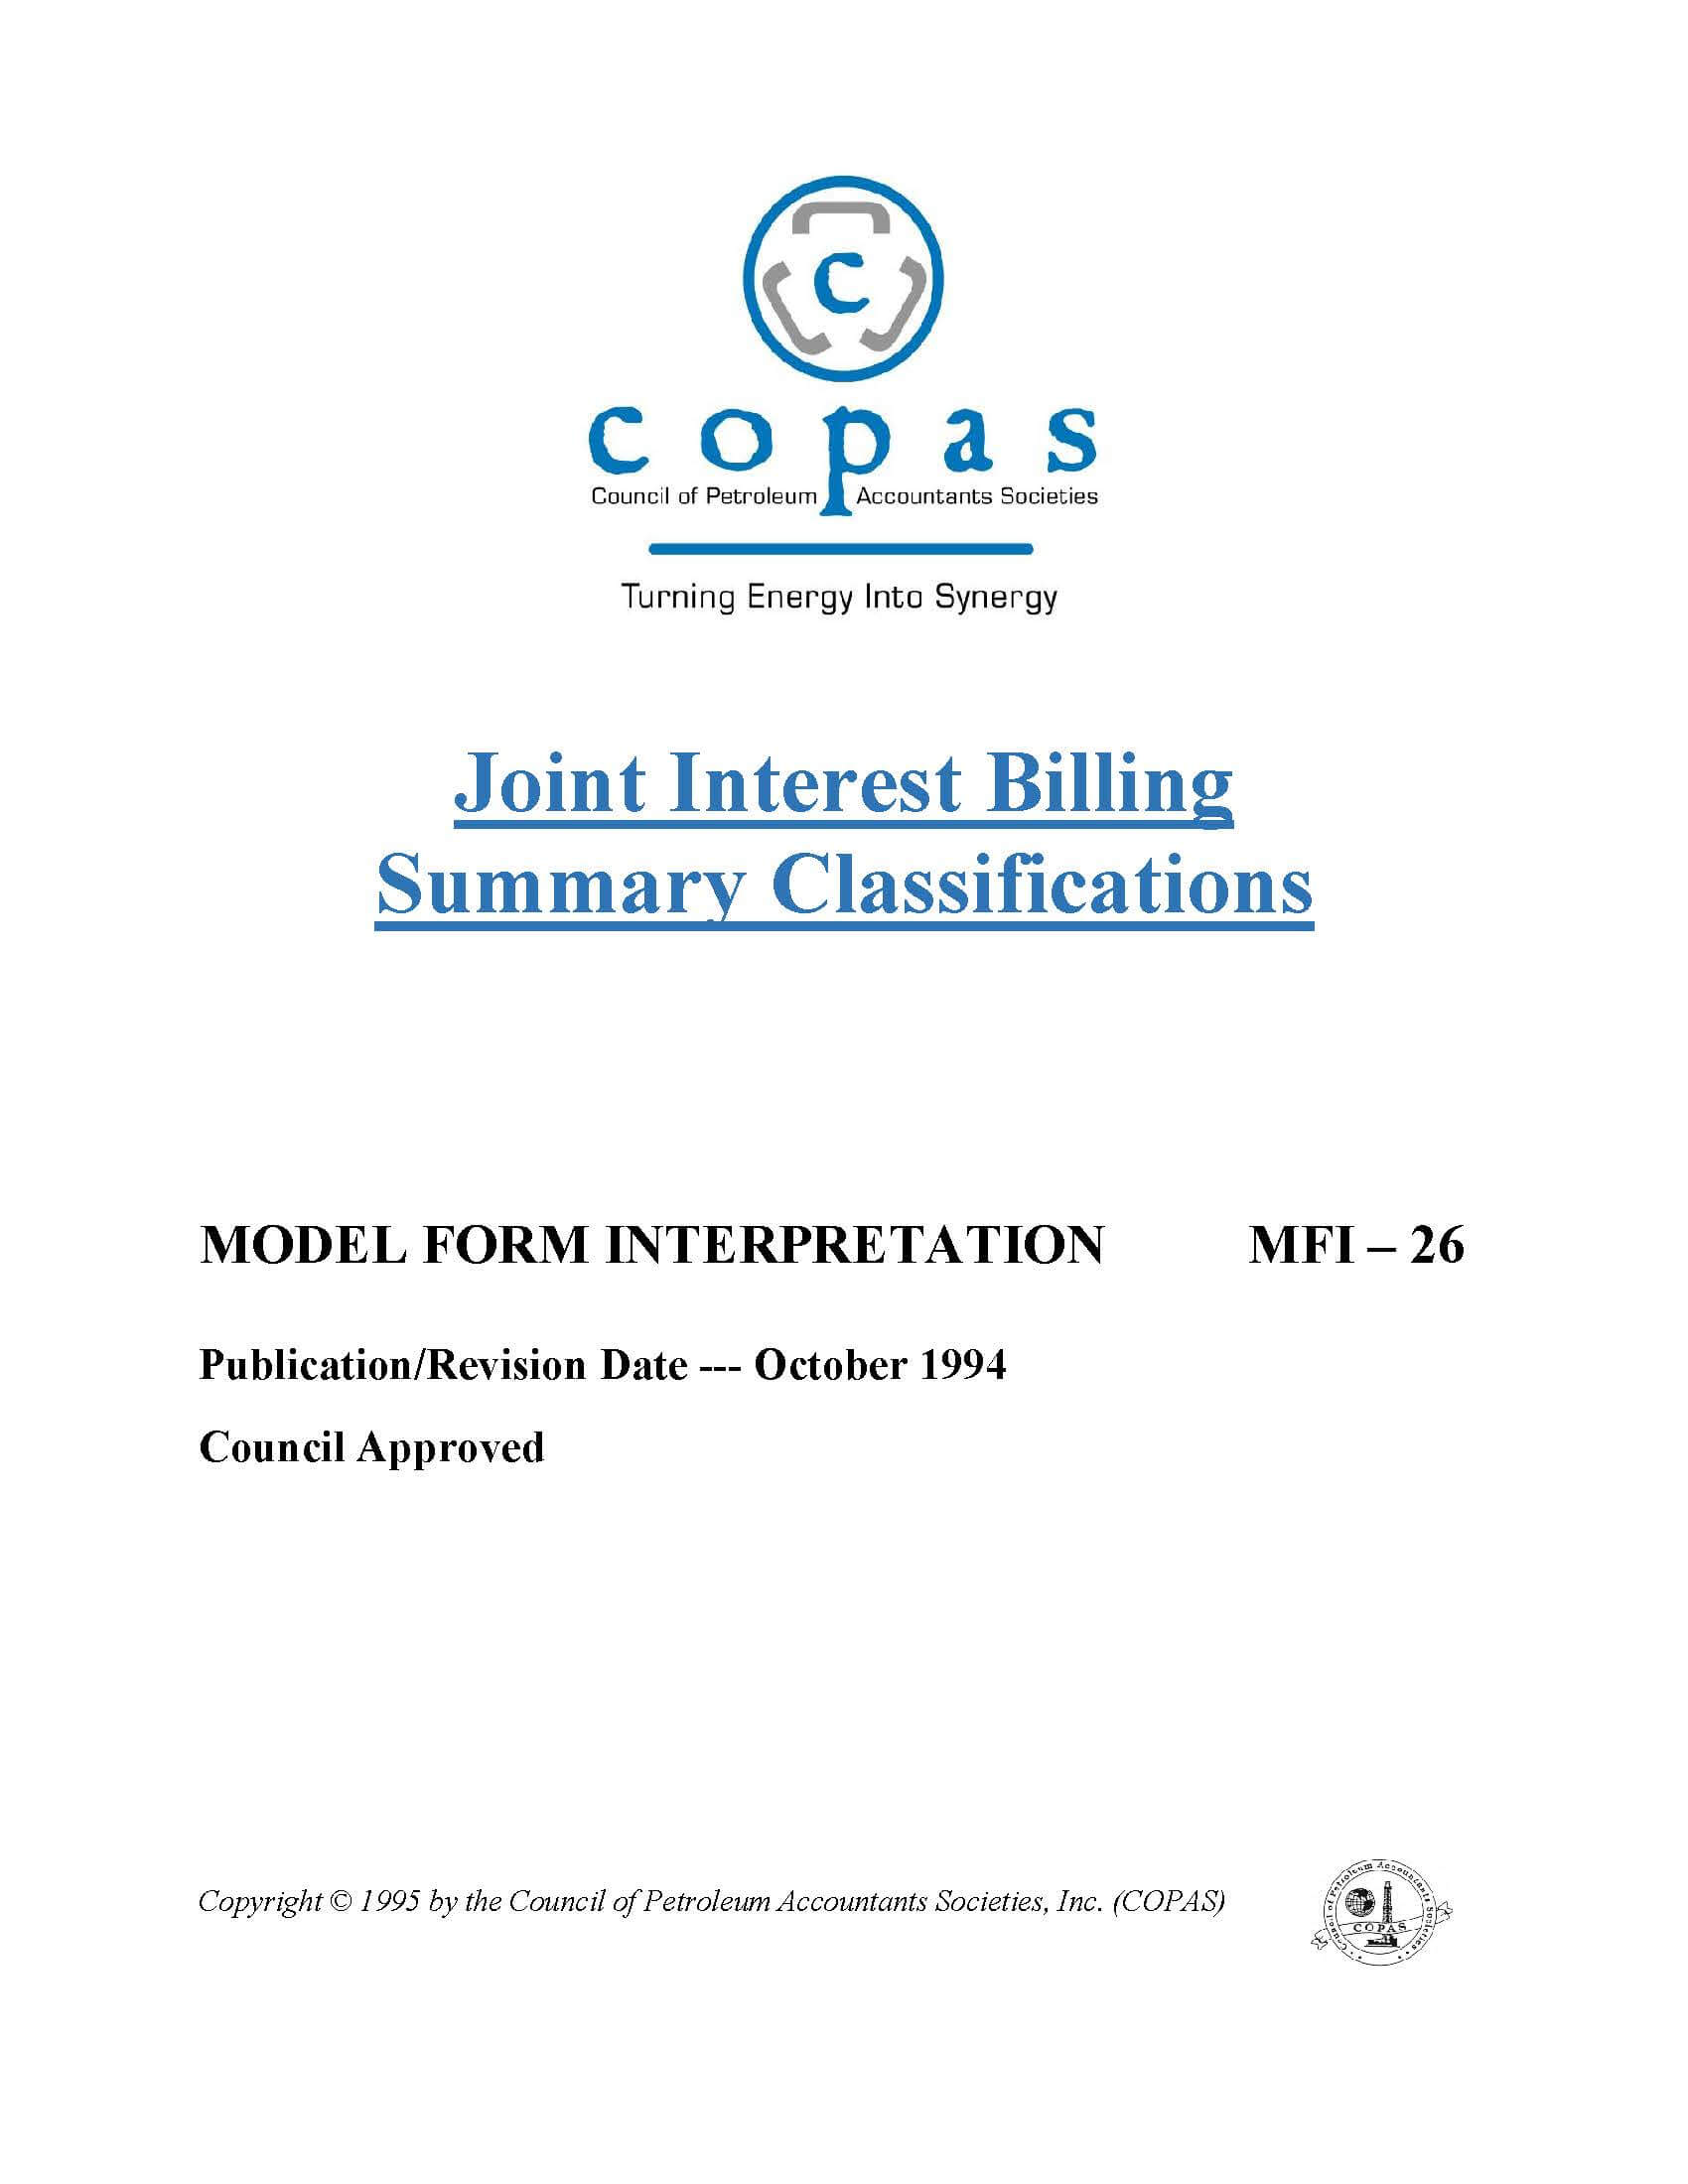 MFI-26 Joint Interest Billing Summary Classifications